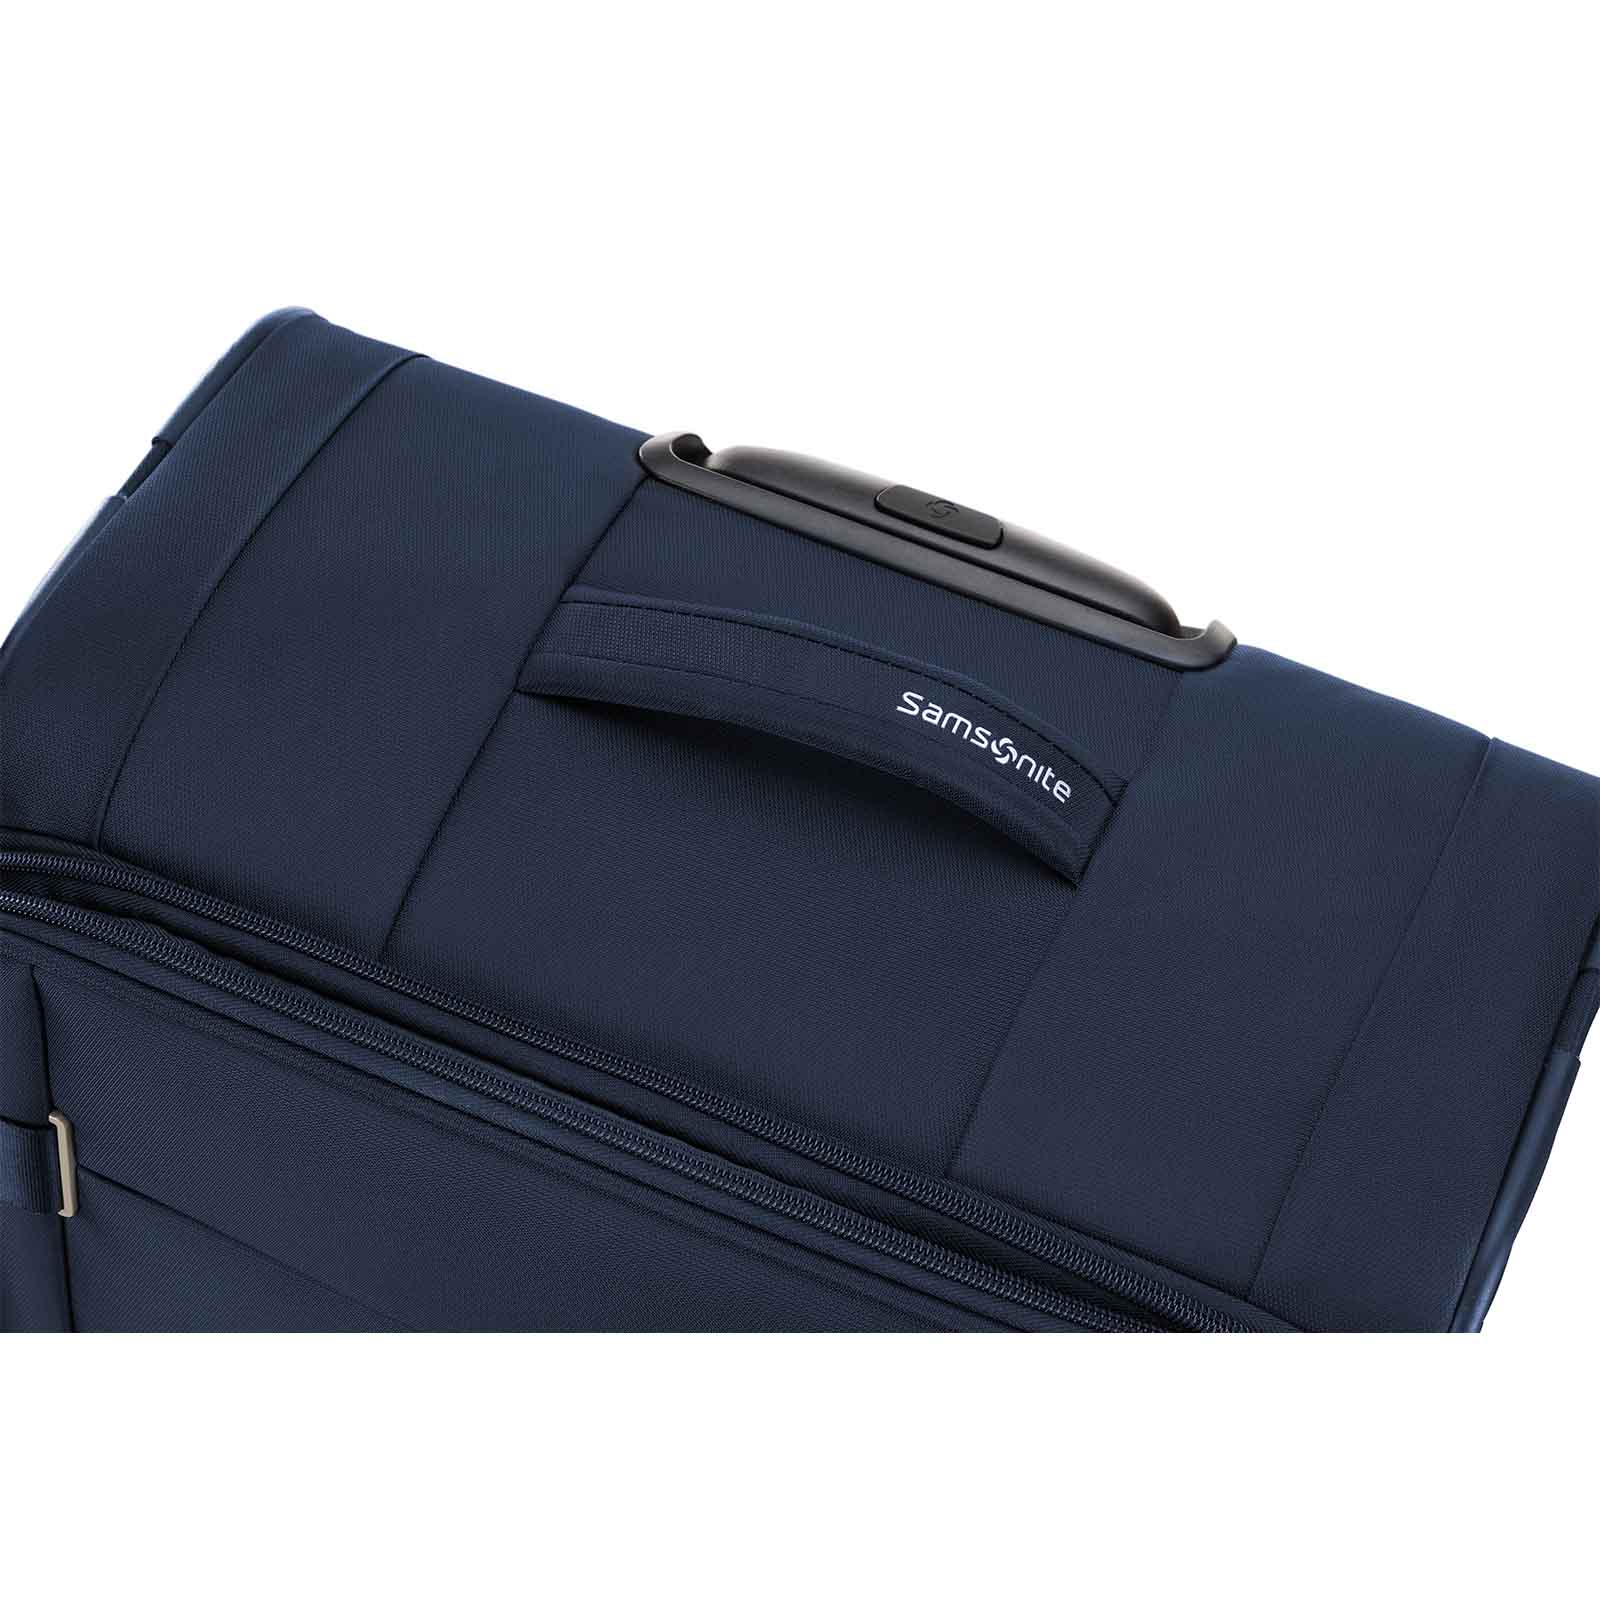 Samsonite-City-Rhythm-Carry-On-55cm-Suitcase-Navy-Handle